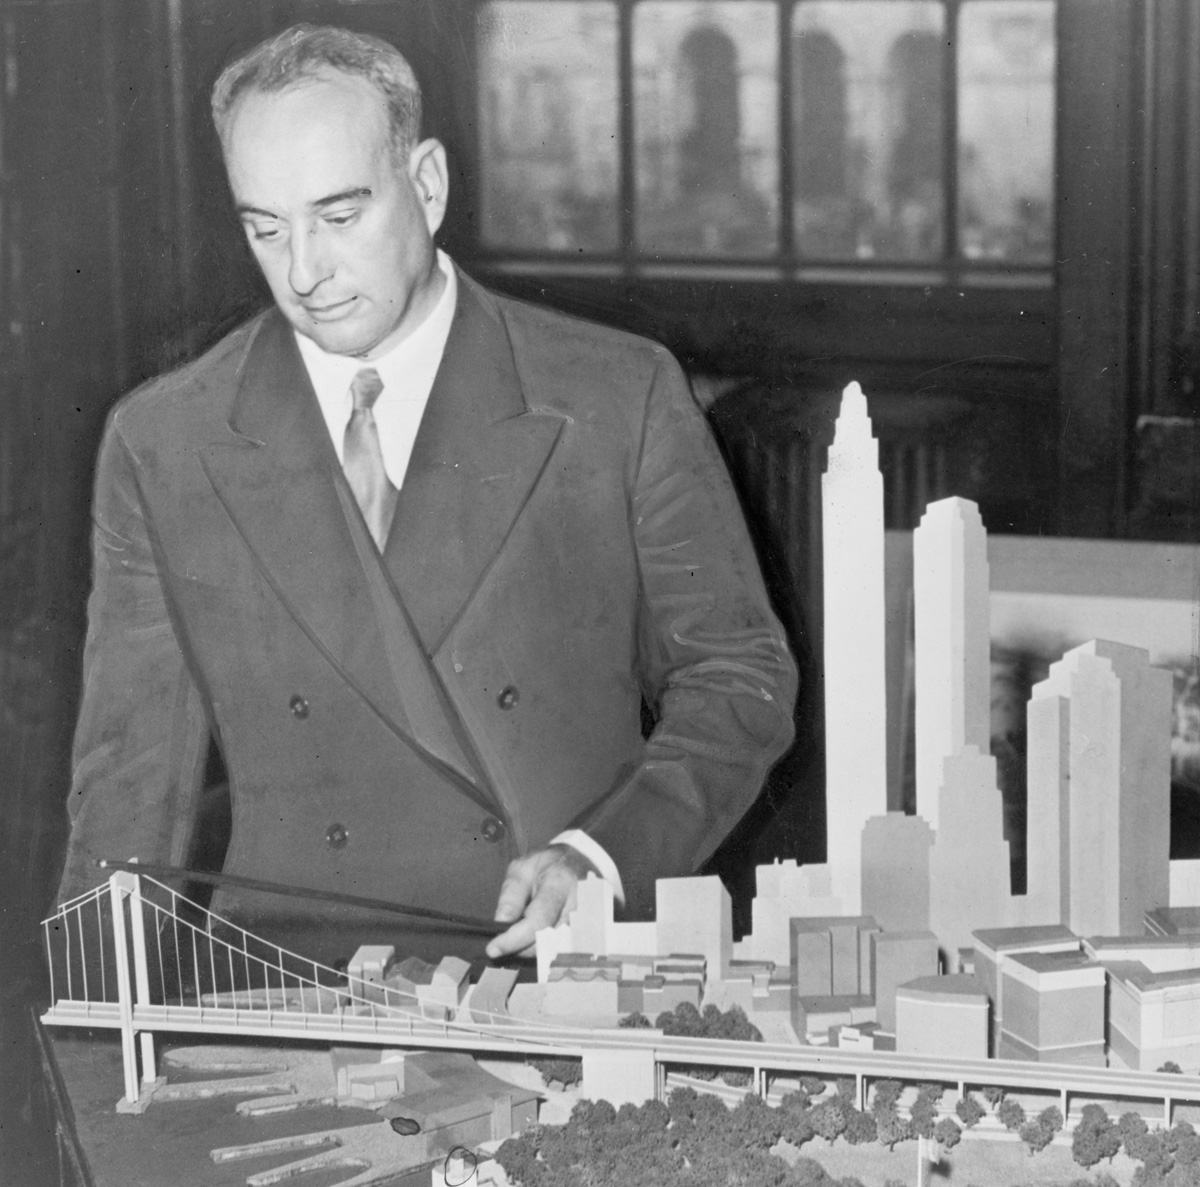 Planner Robert Moses shaped New York